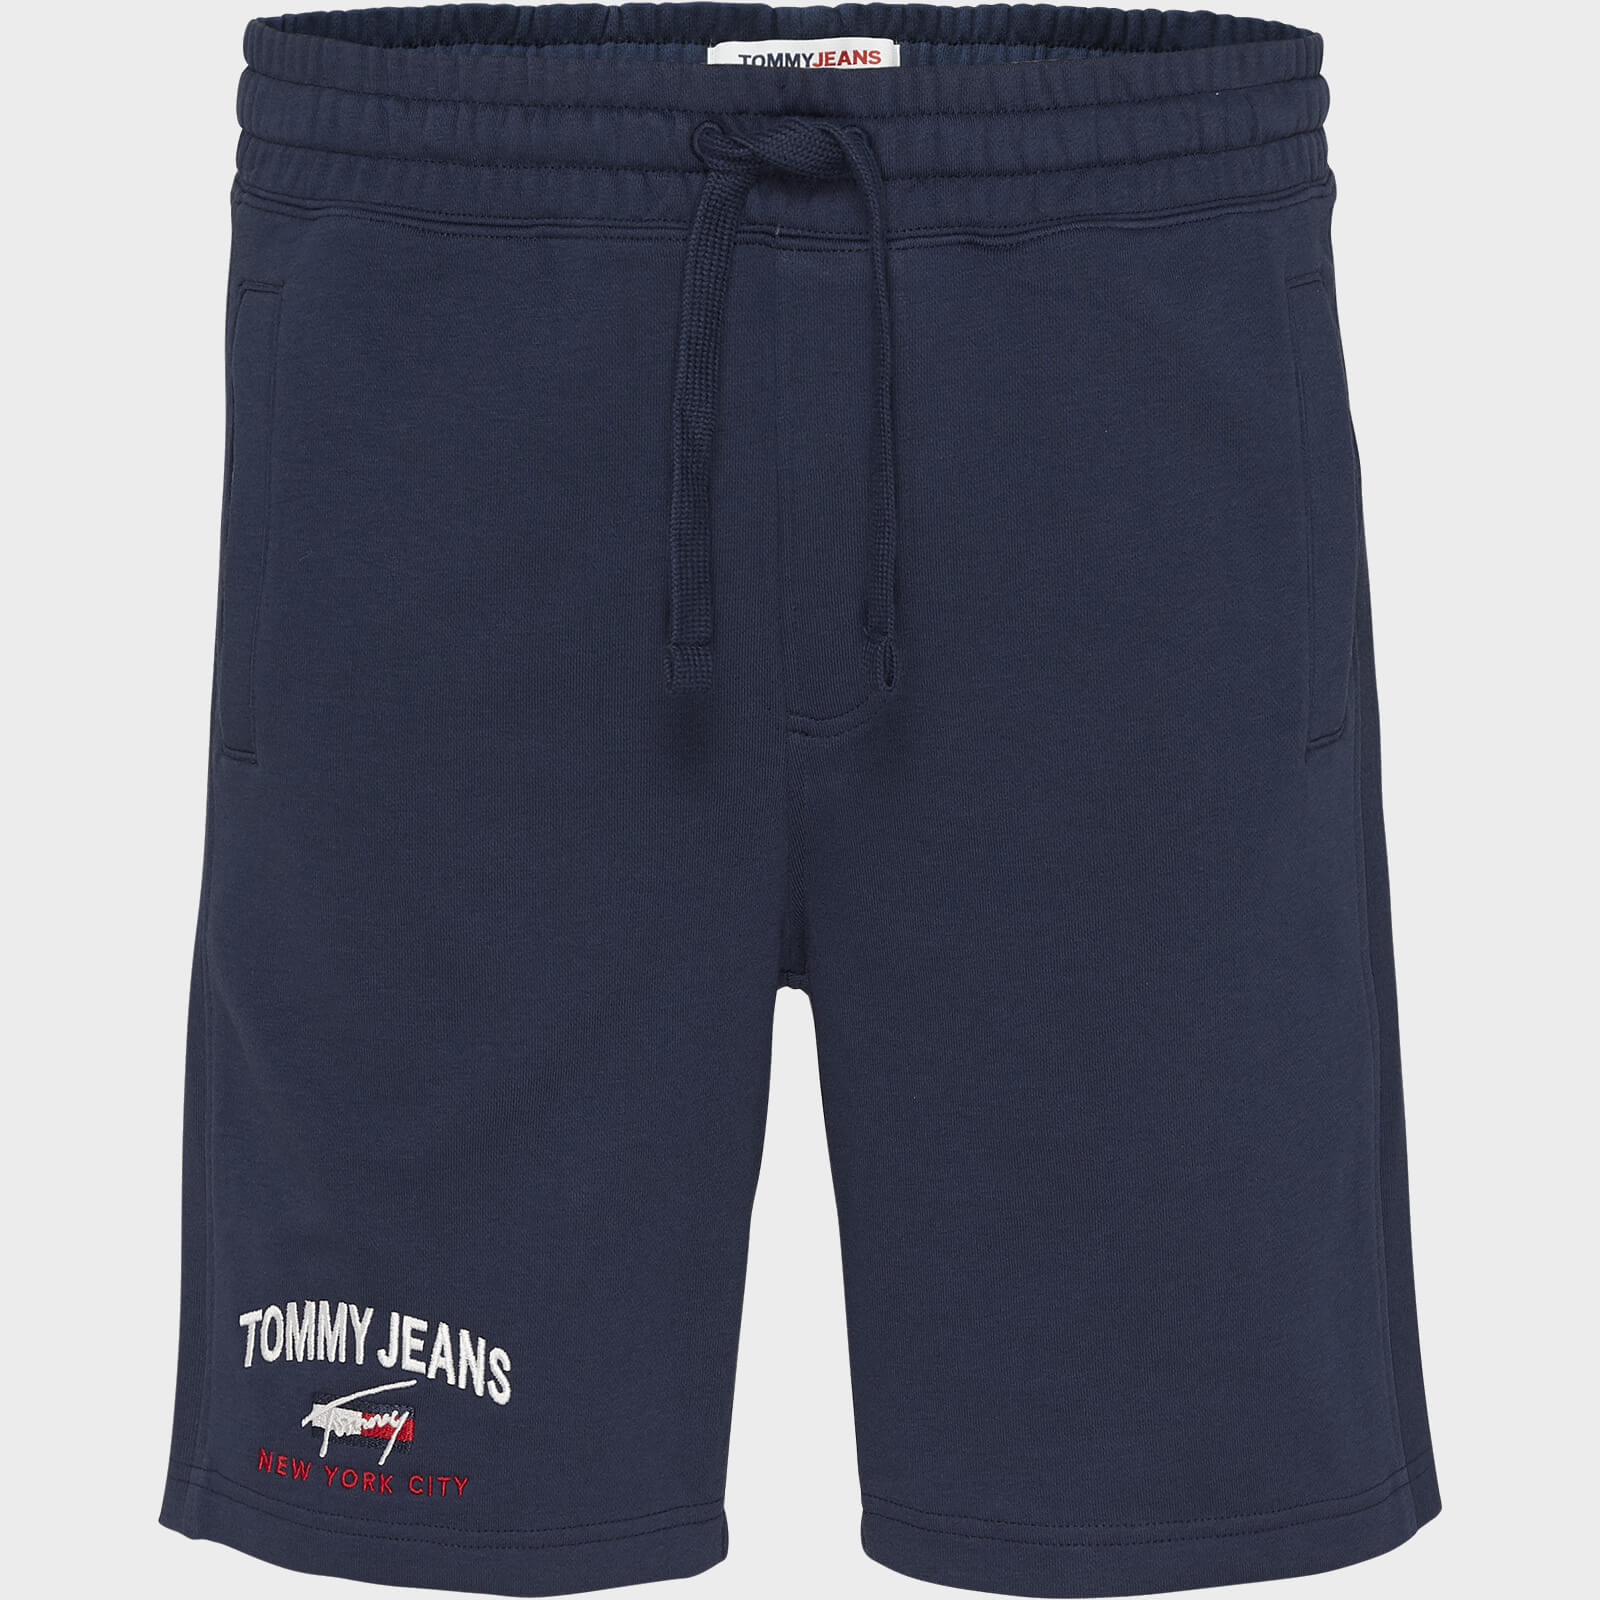 Tommy Jeans Men's Timeless Shorts - Twilight Navy - S